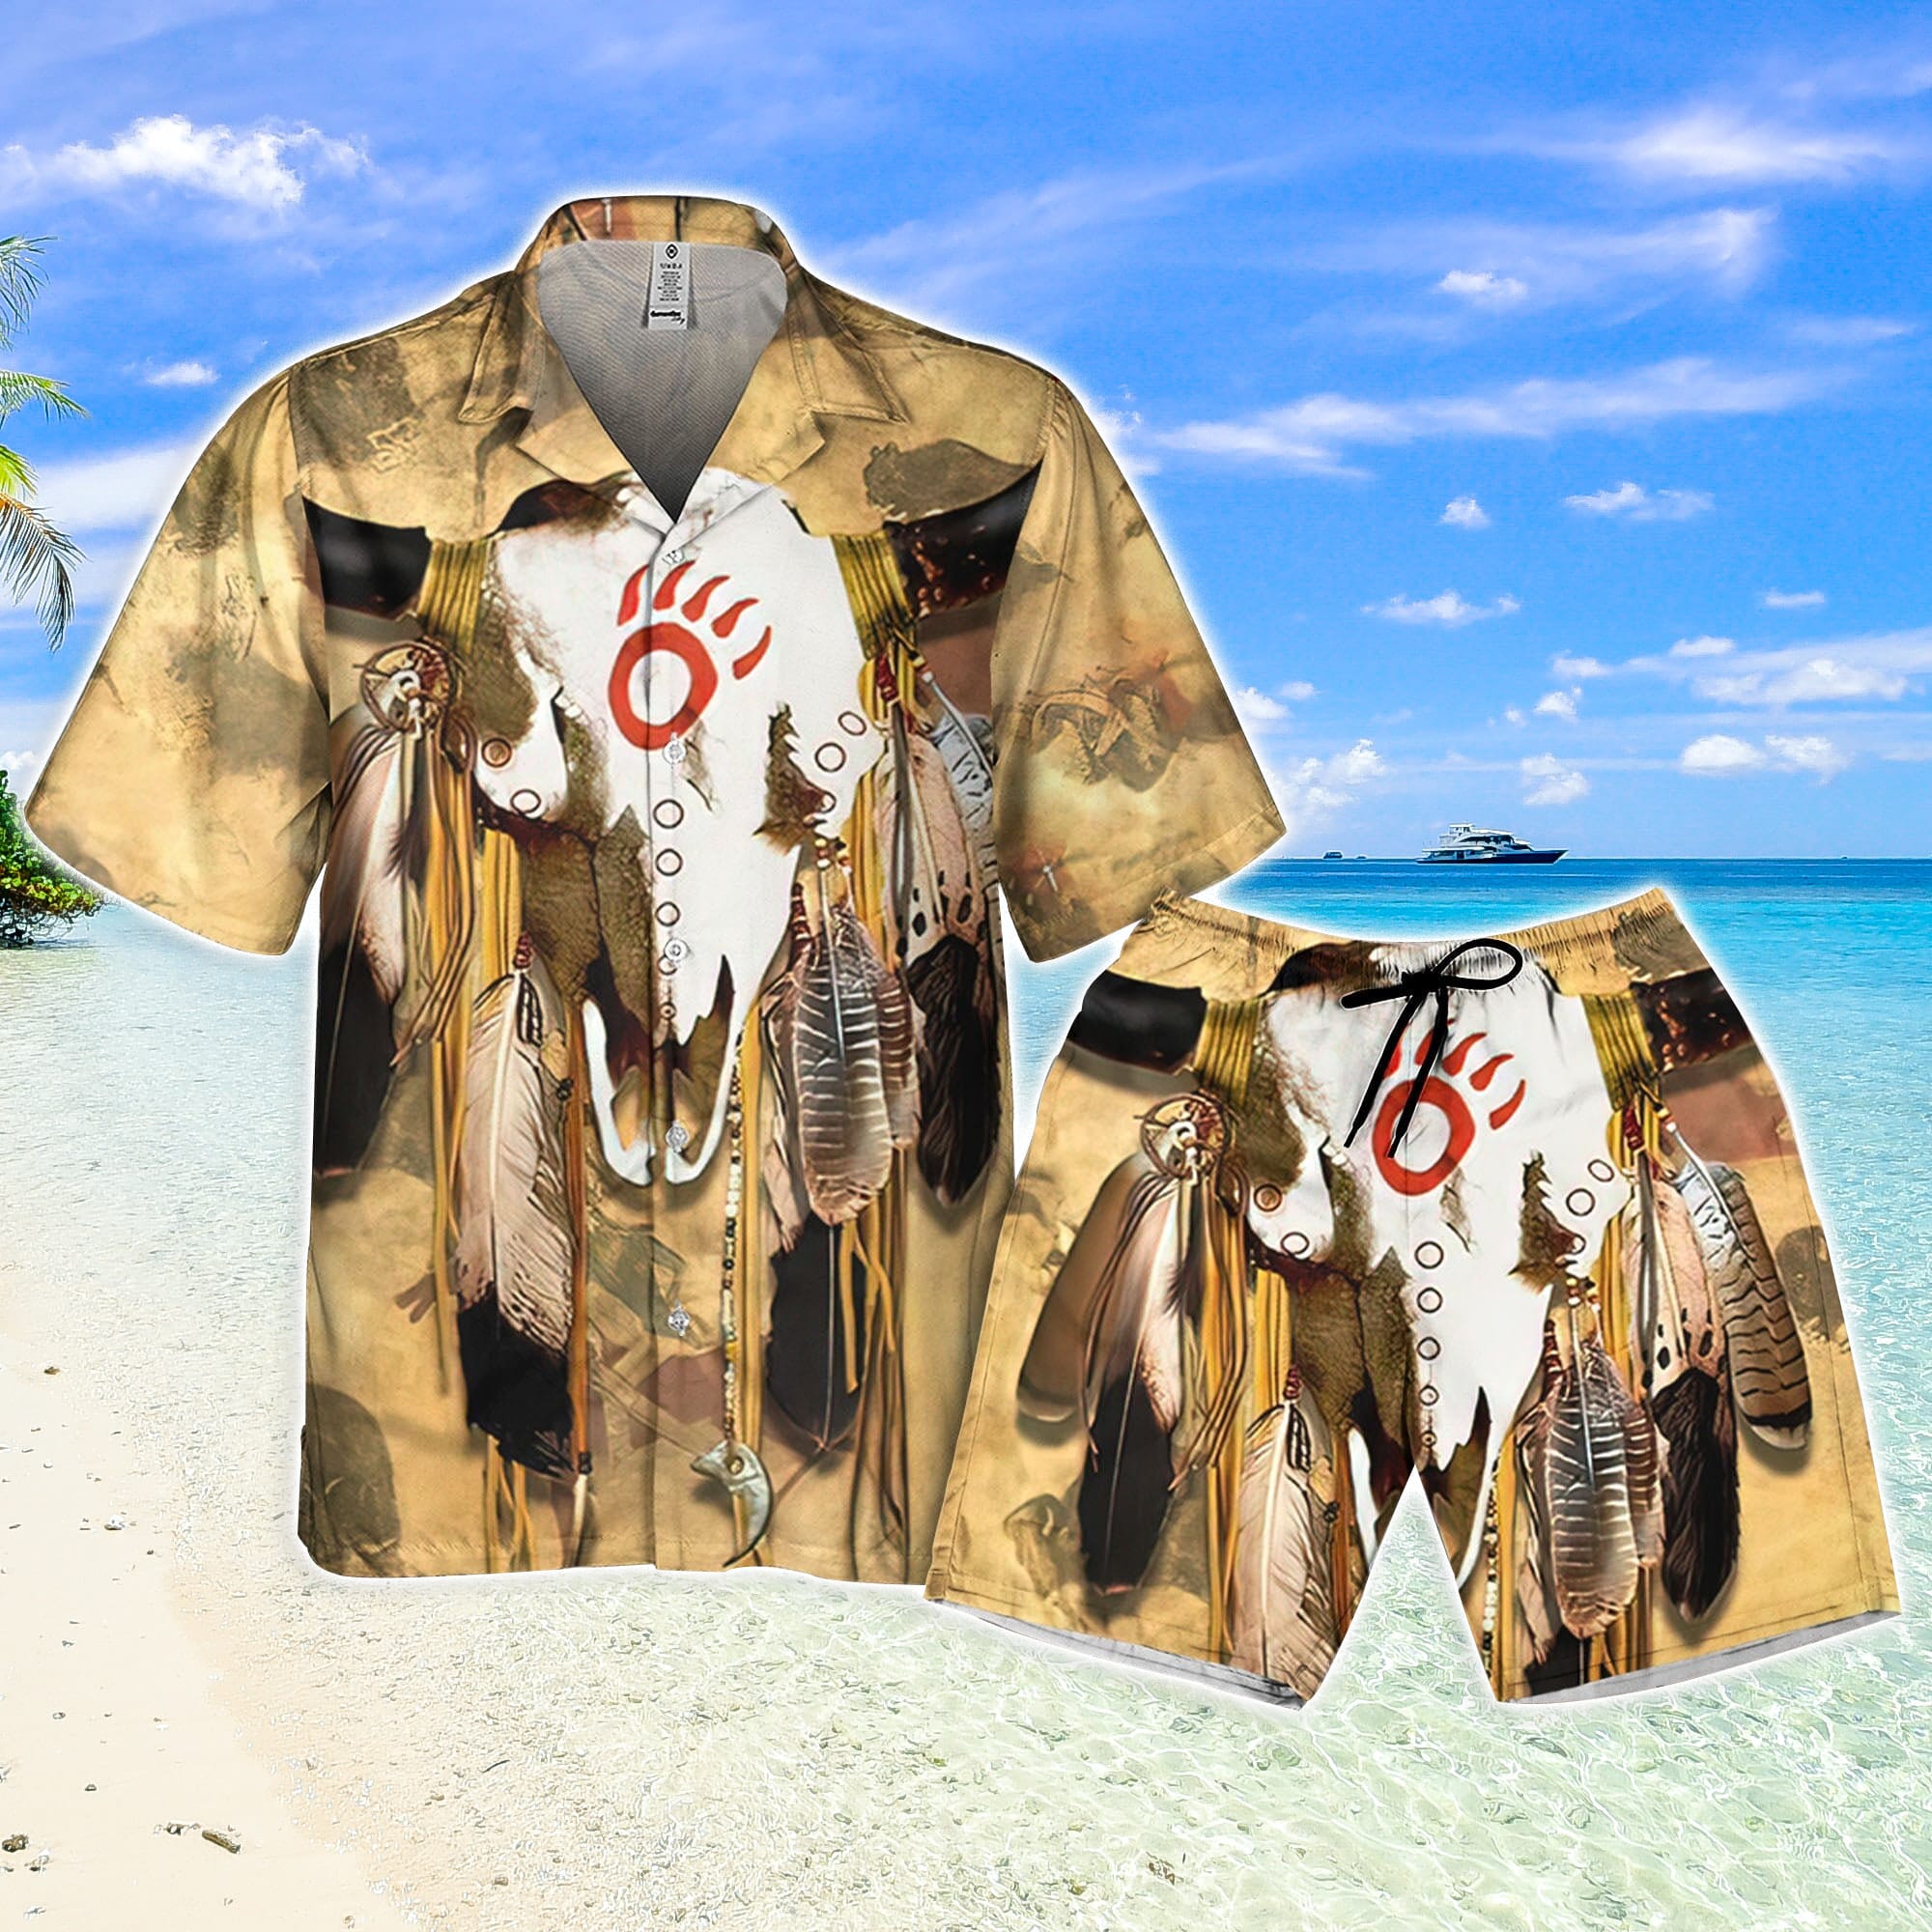 Native American Traditional Style Aloha Hawaiian Shirt And Shorts  Traditional Style shirt - Banantees